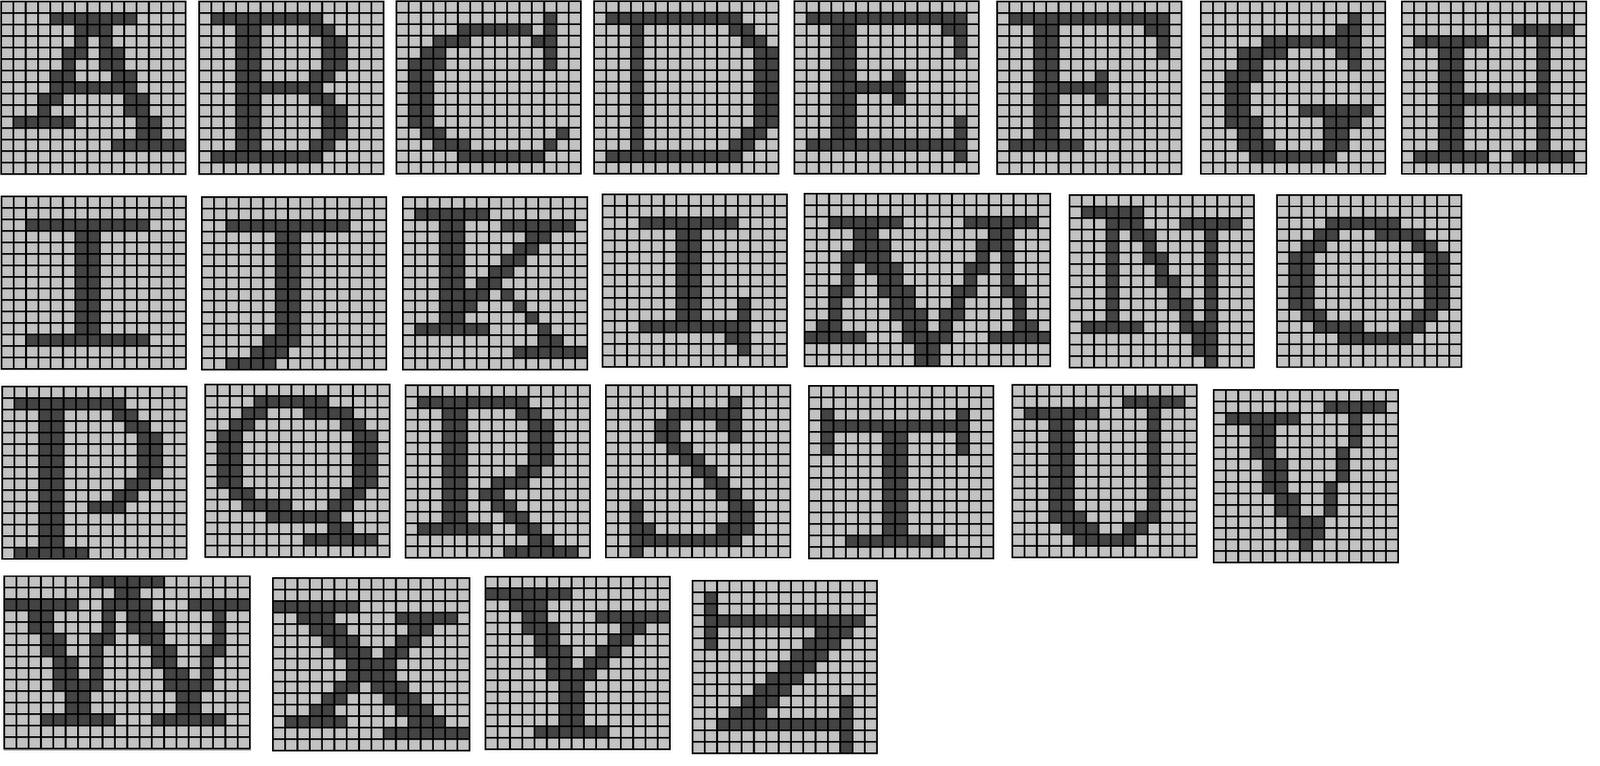 Alphabet Knitting Chart